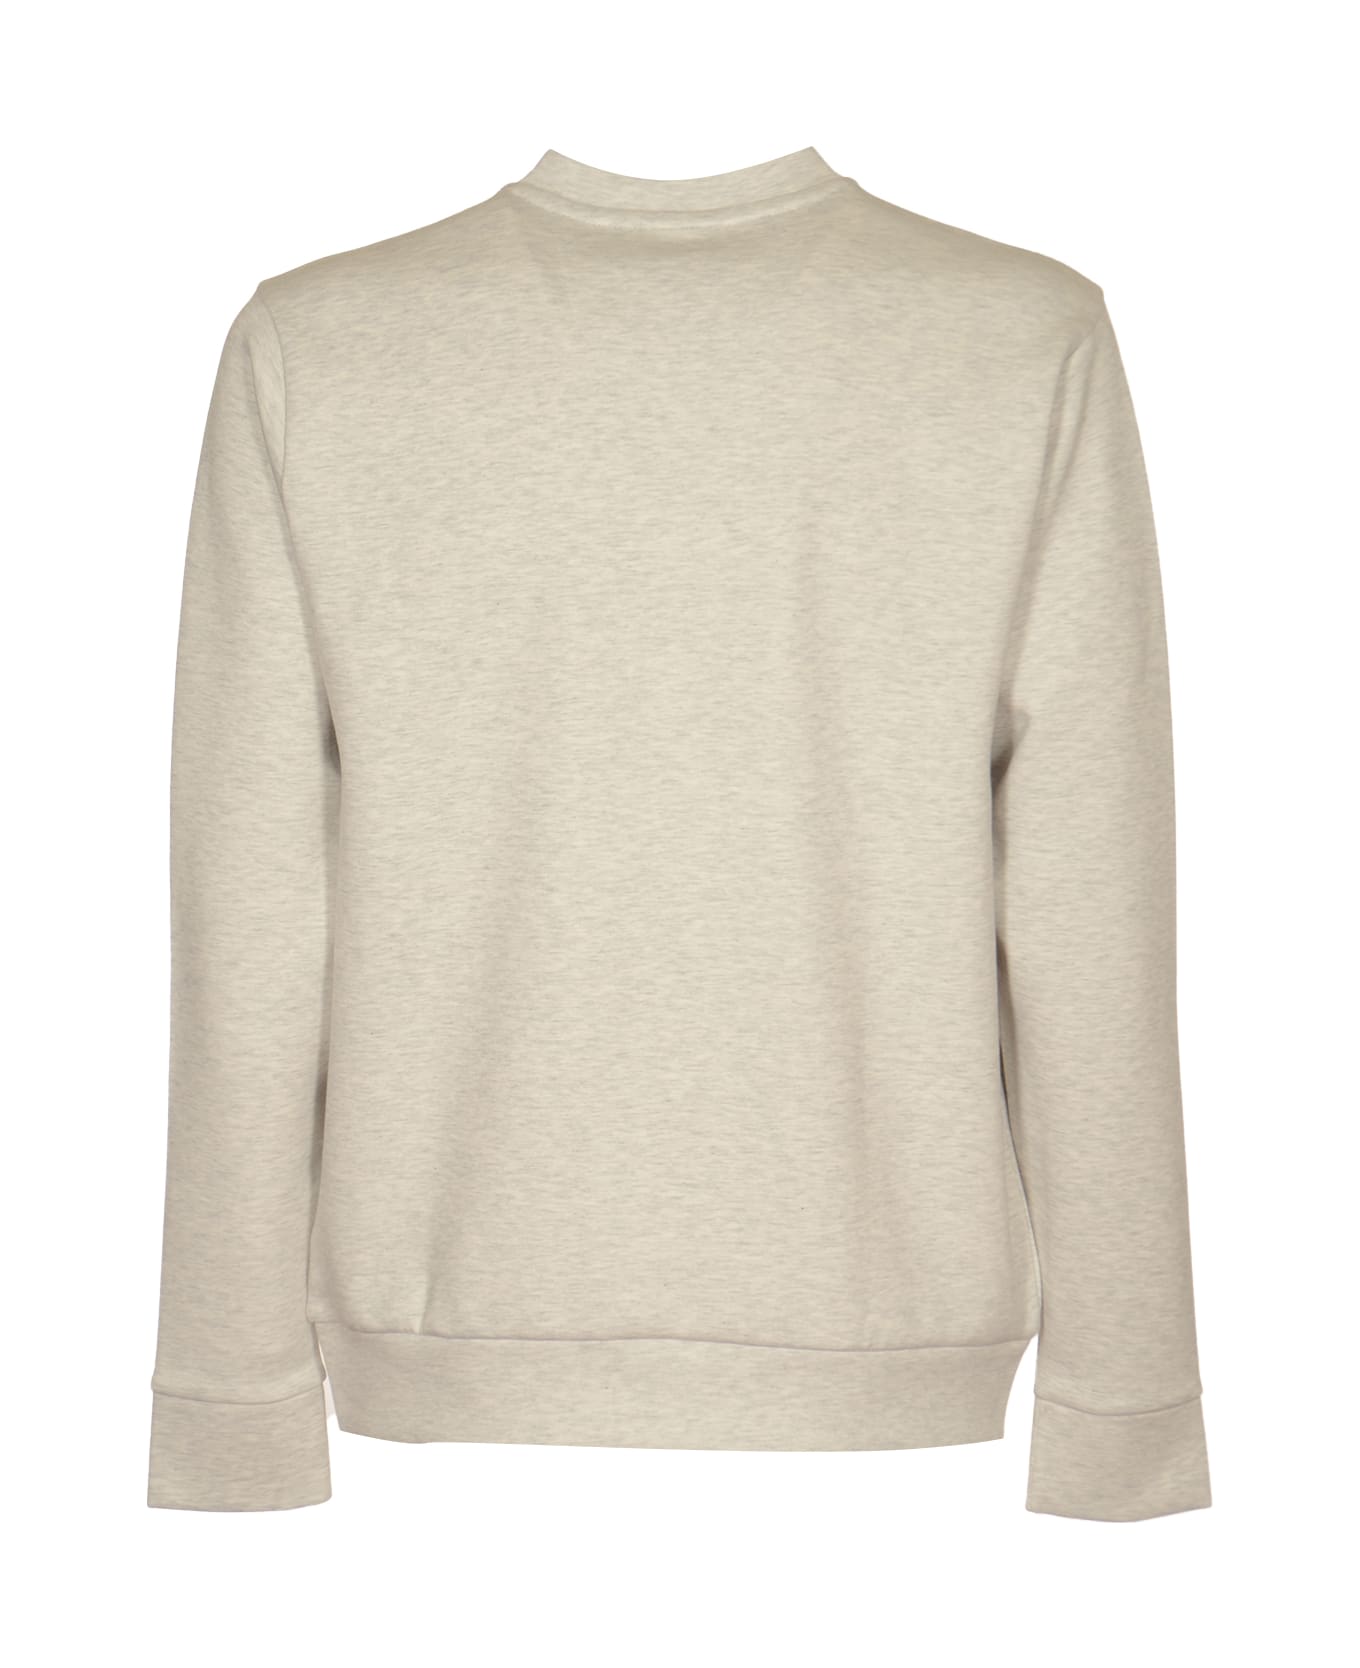 Hugo Boss Logo Sweatshirt - Light Pastel Grey